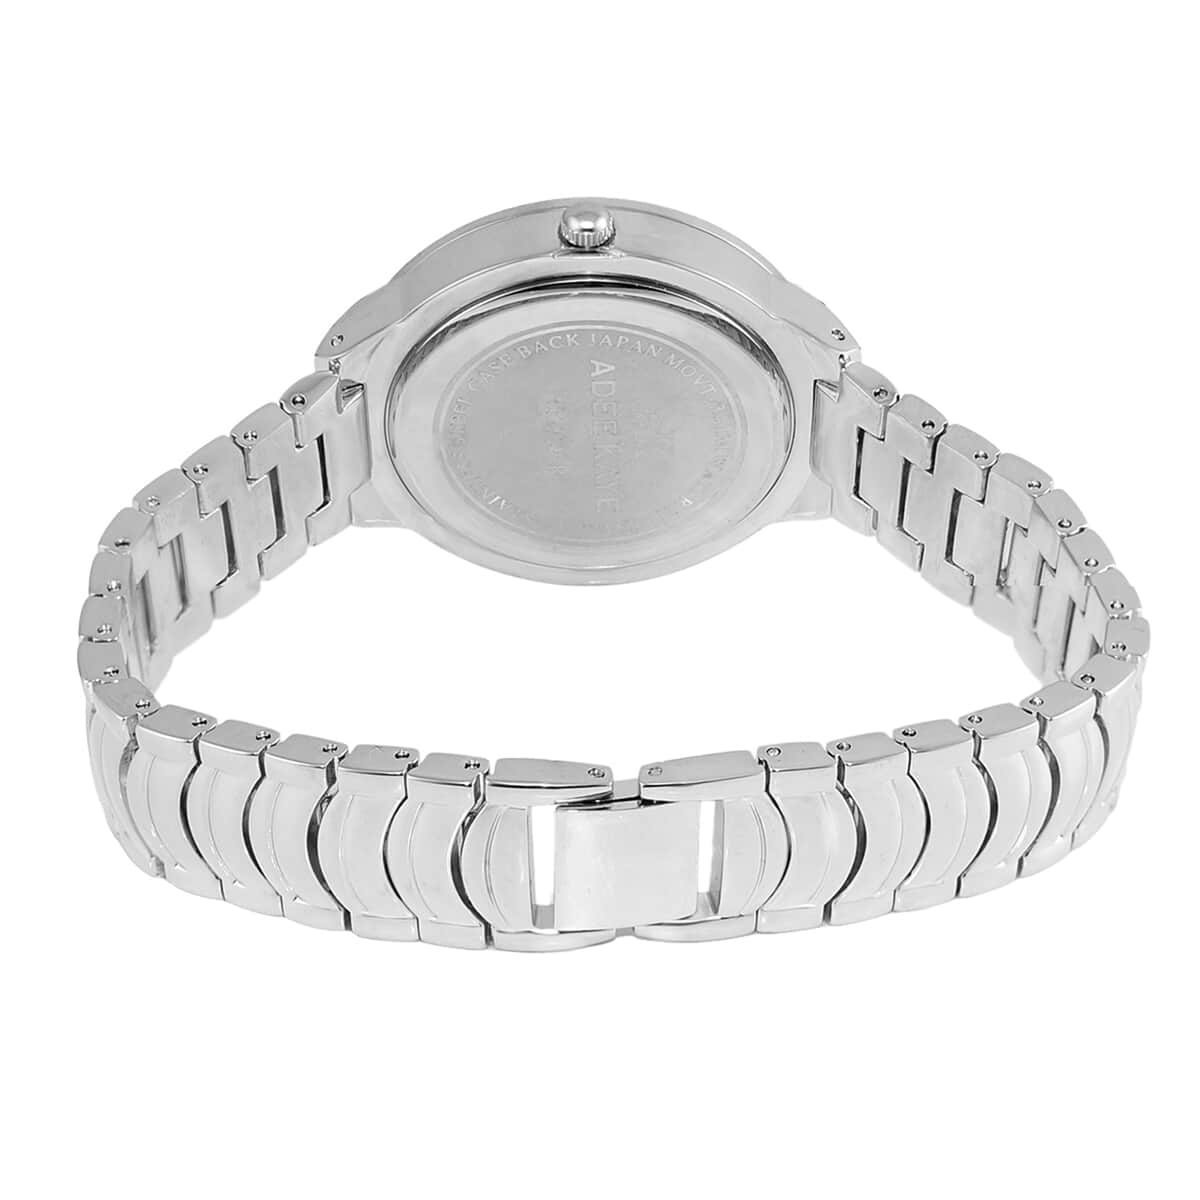 ADEE KAYE Austrian Crystal Japan Quartz Movement Watch in Stainless Steel Strap (38 mm) | Designer Bracelet Watch | Analog Luxury Wristwatch image number 2